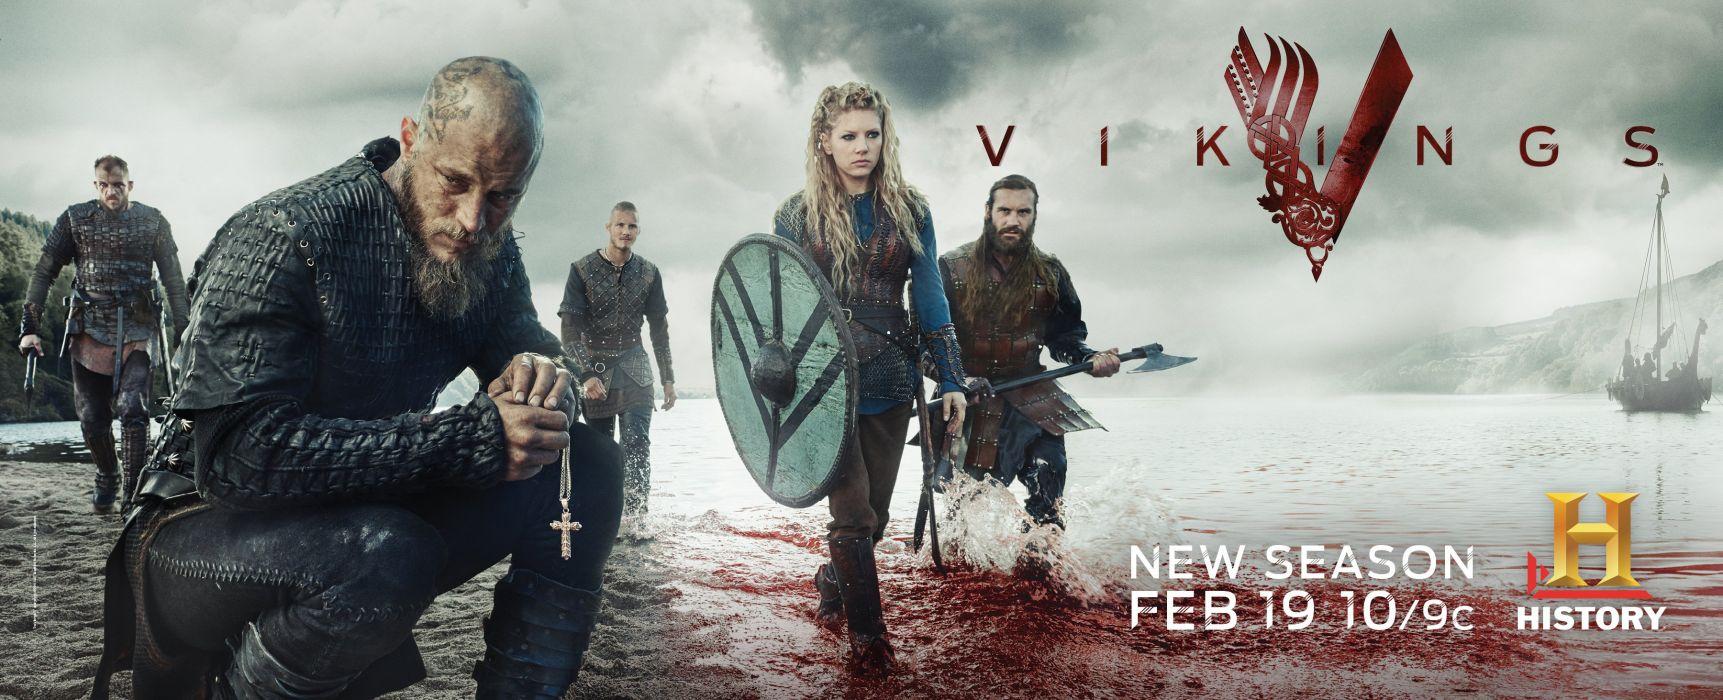 VIKINGS action drama history fantasy adventure series 1vikings